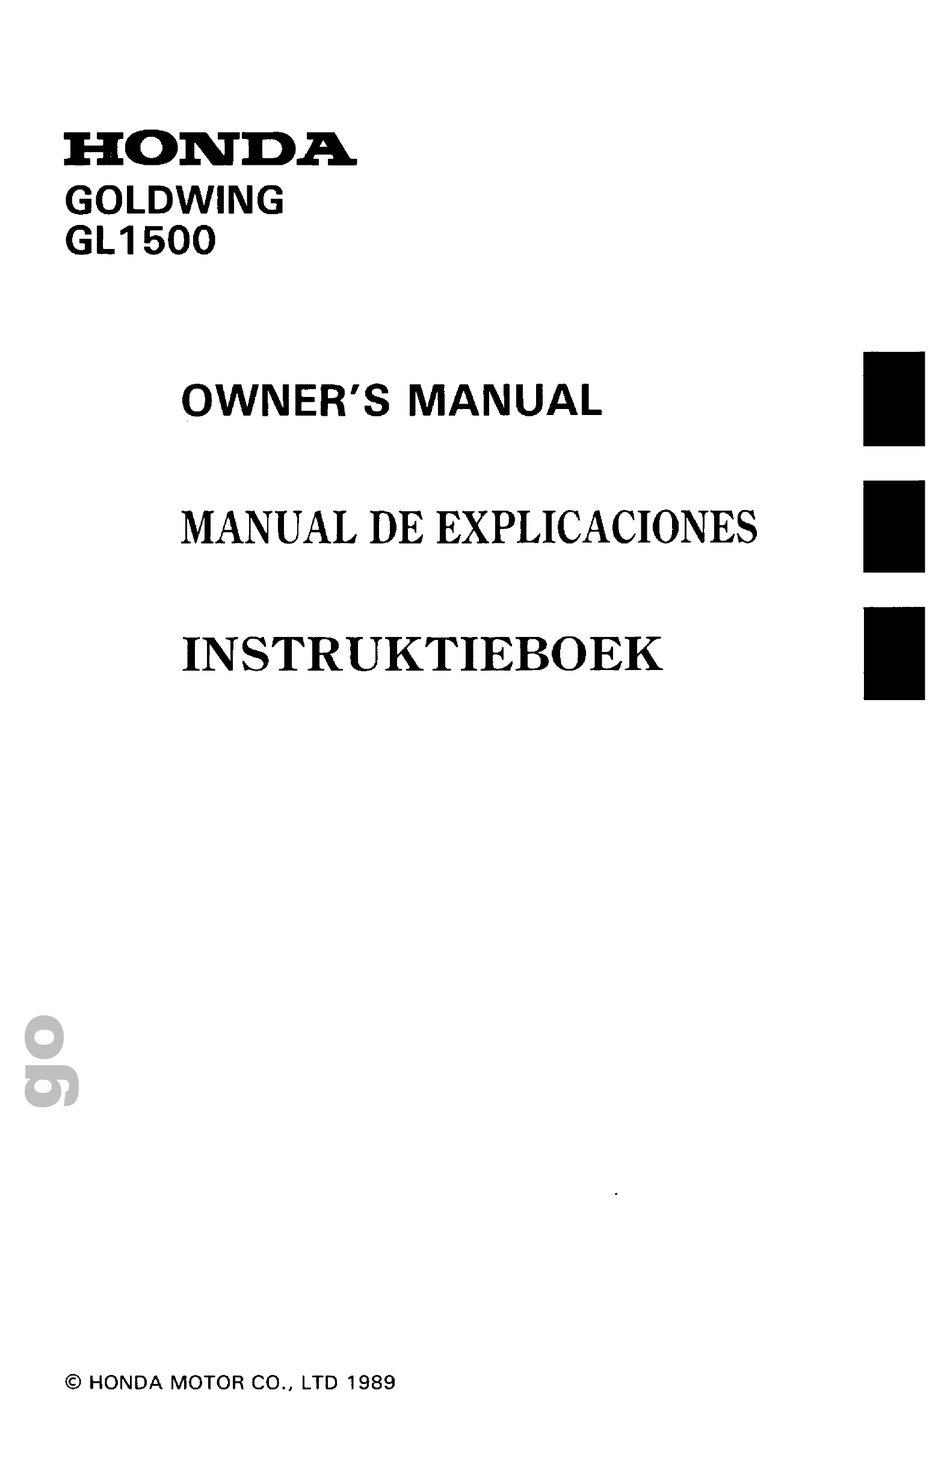 New Owners Manual 1990 GL1500 Goldwing OEM Honda Operators Book        #L01 